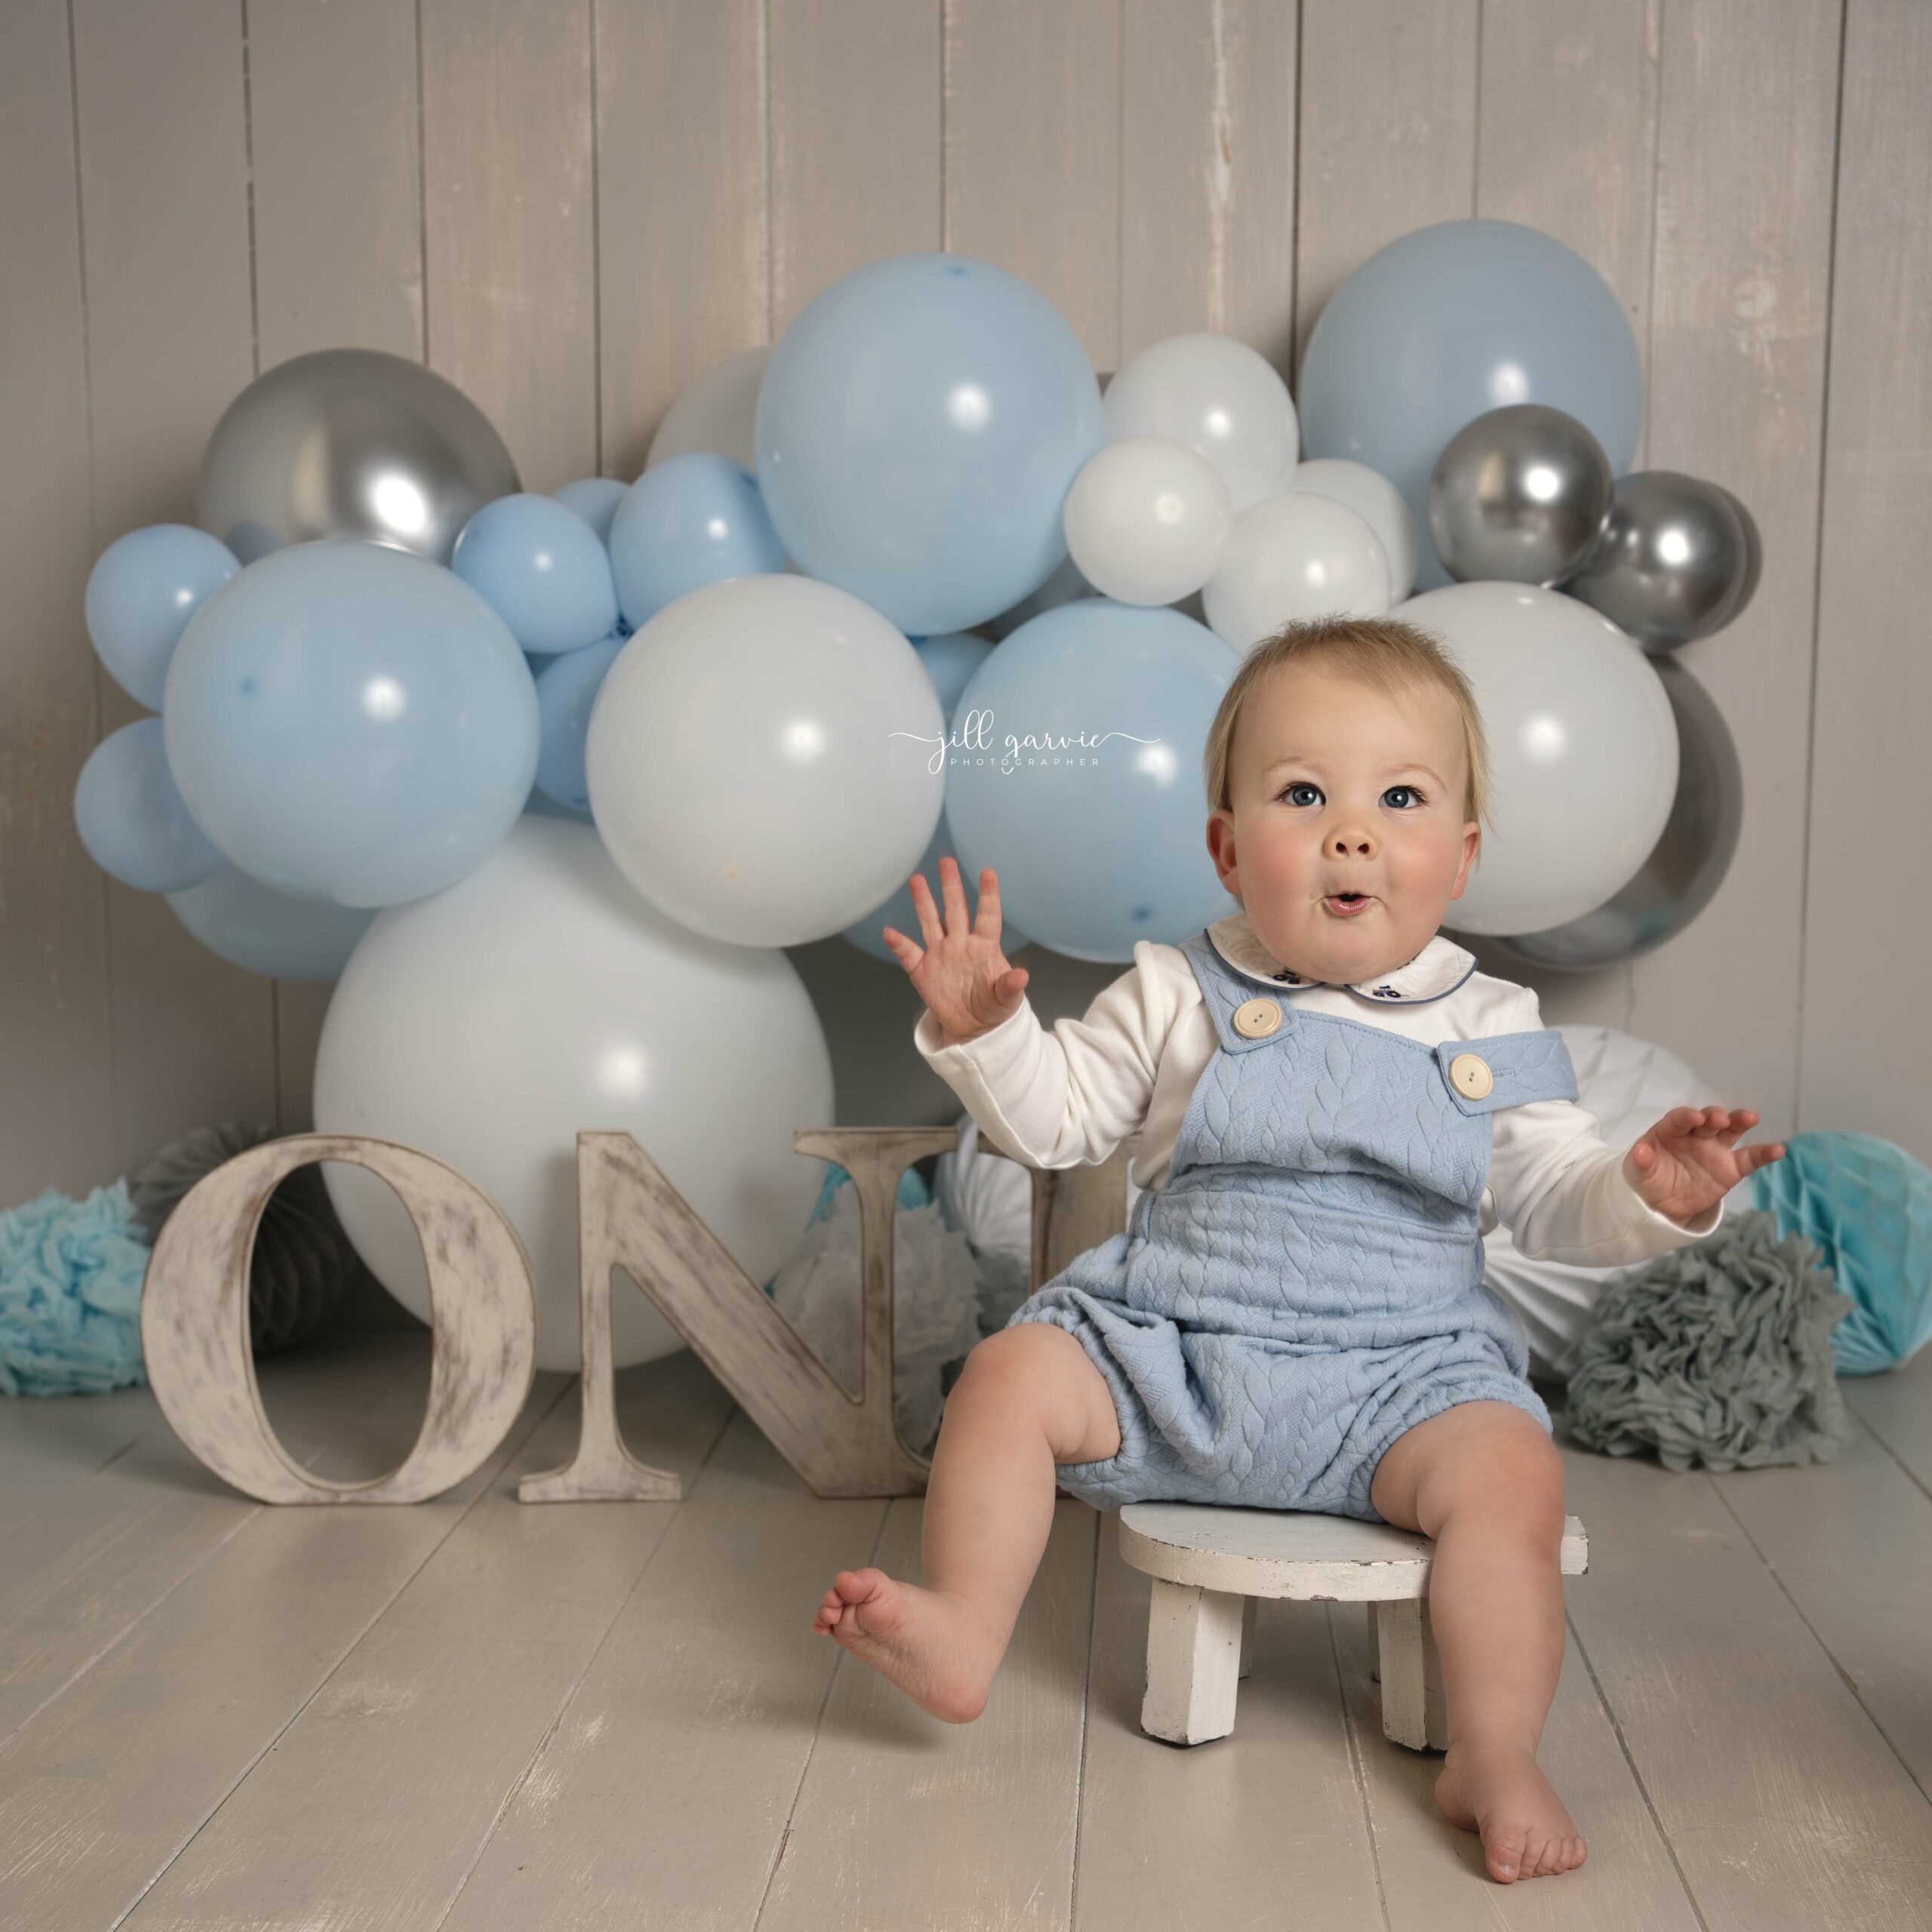 Birthday boy with blue balloons